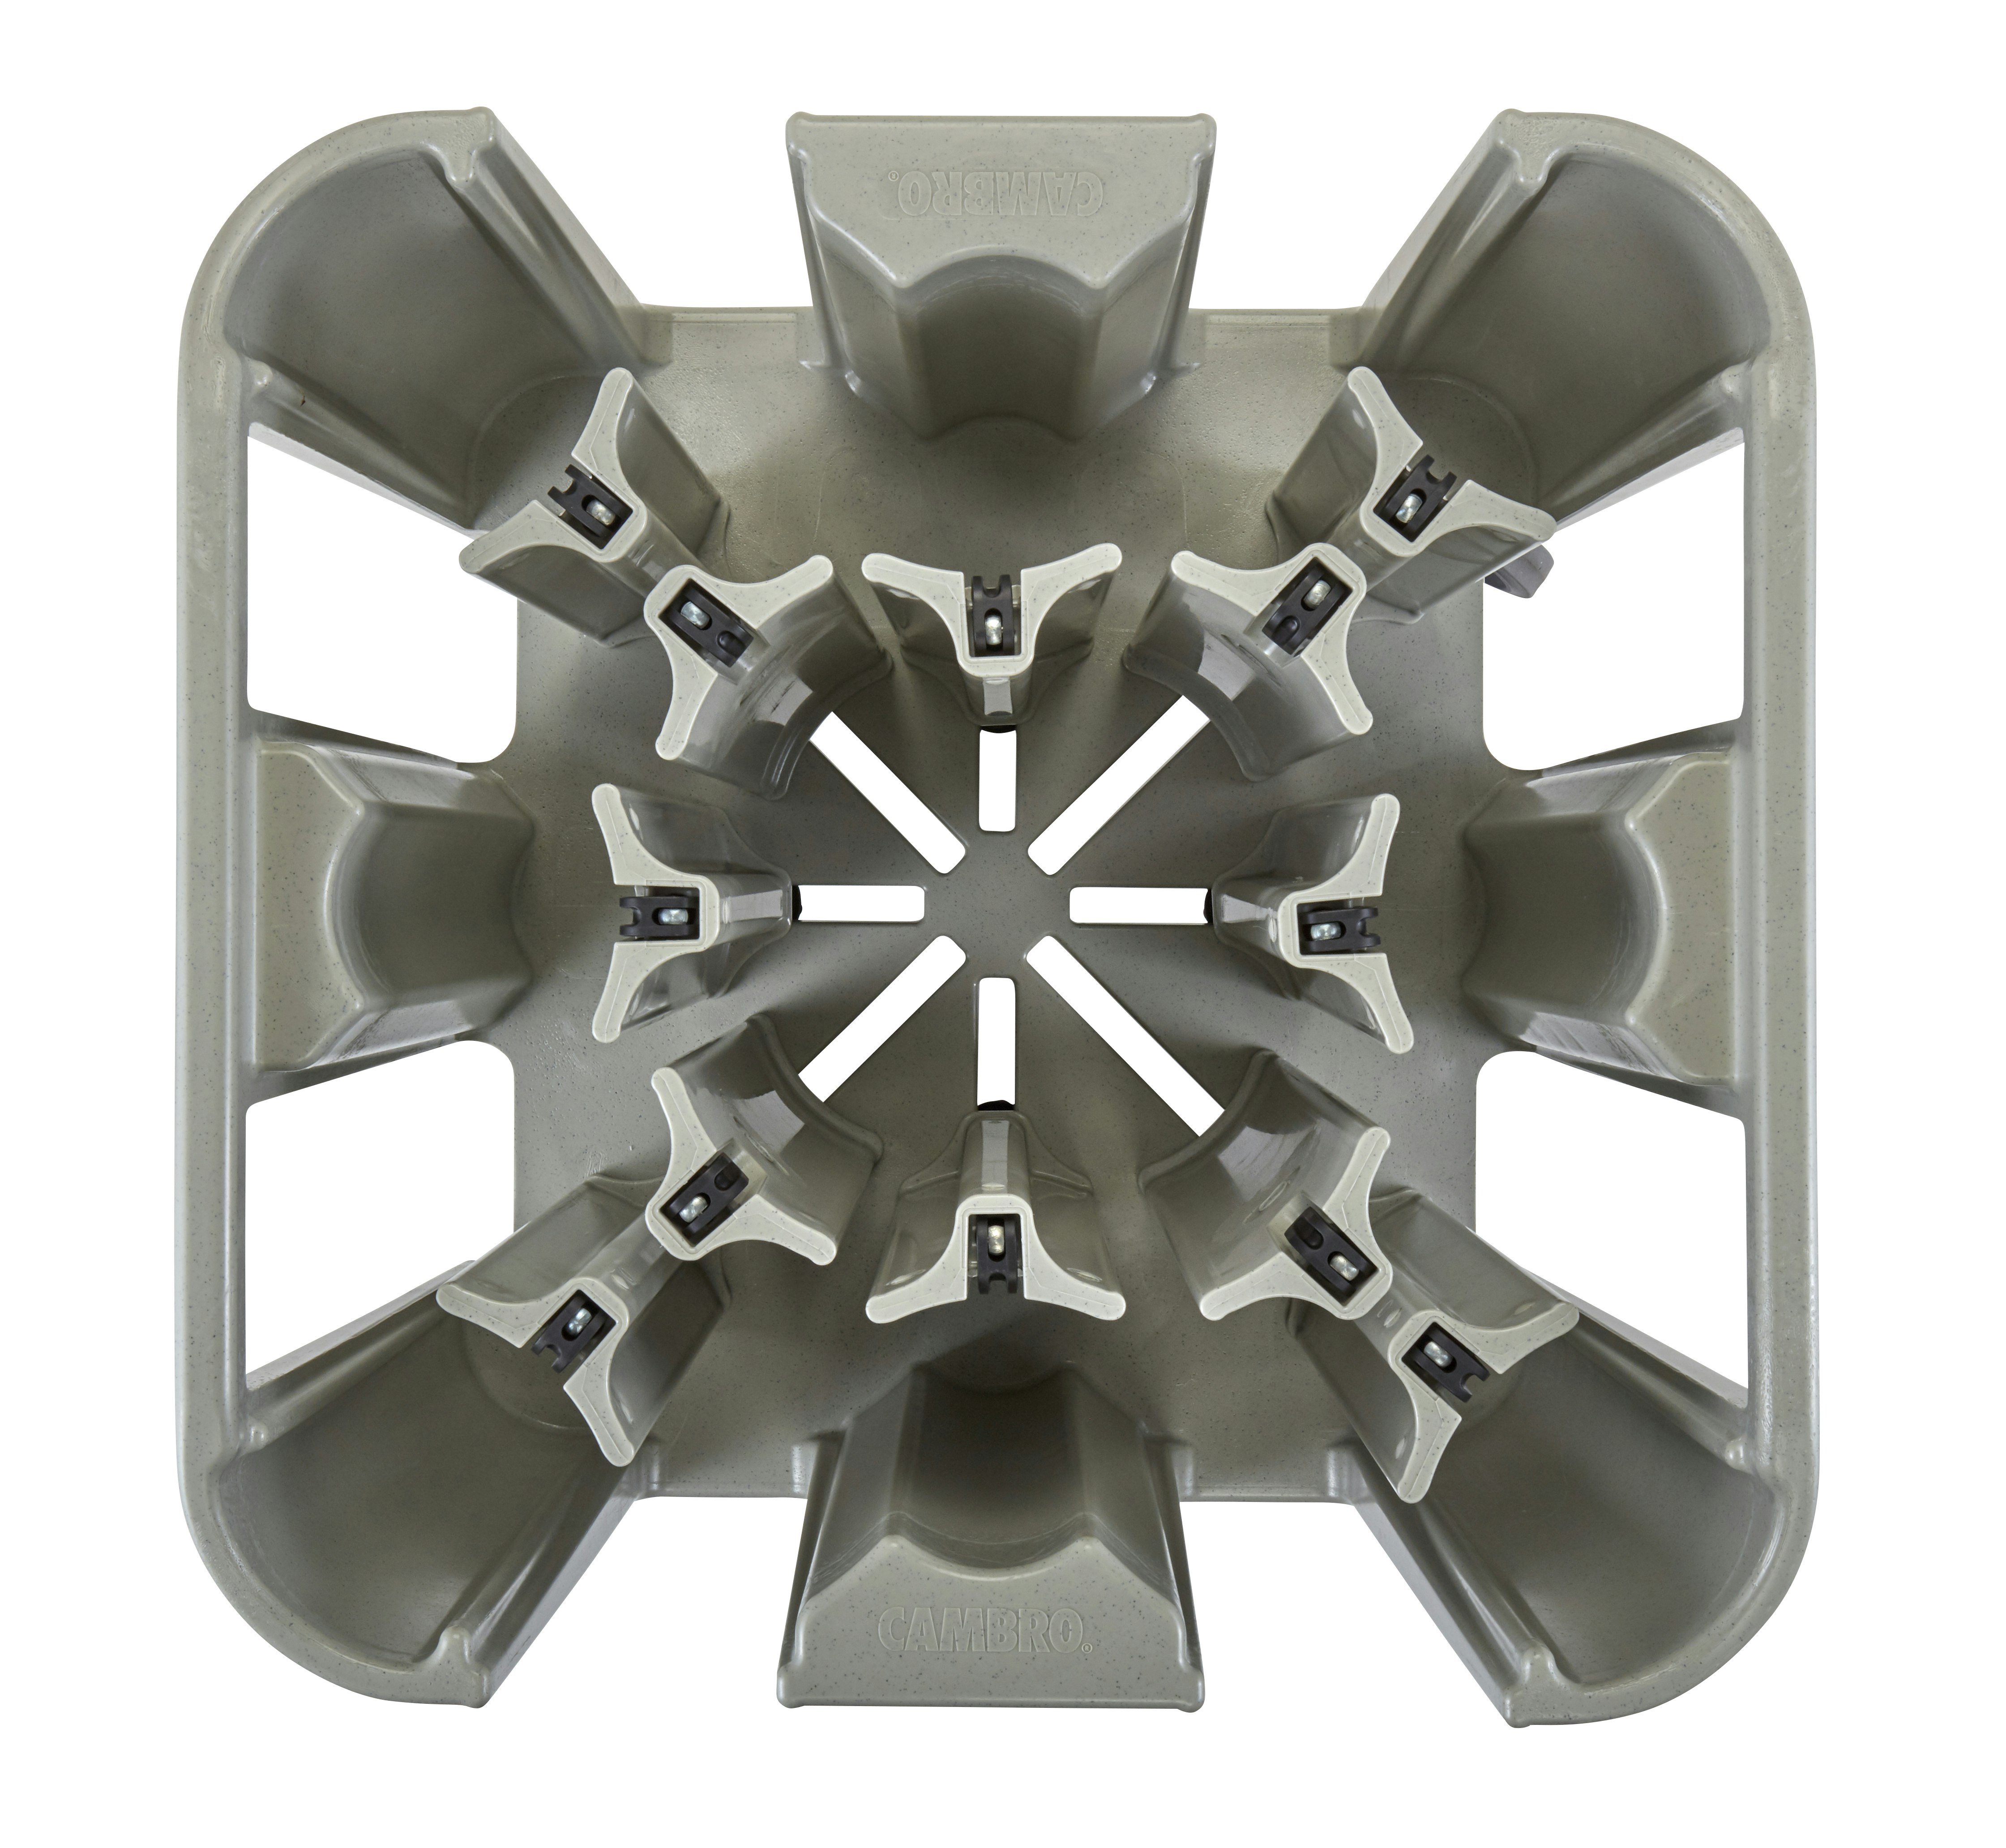 S- Series Compact Adjustable Dish Caddies